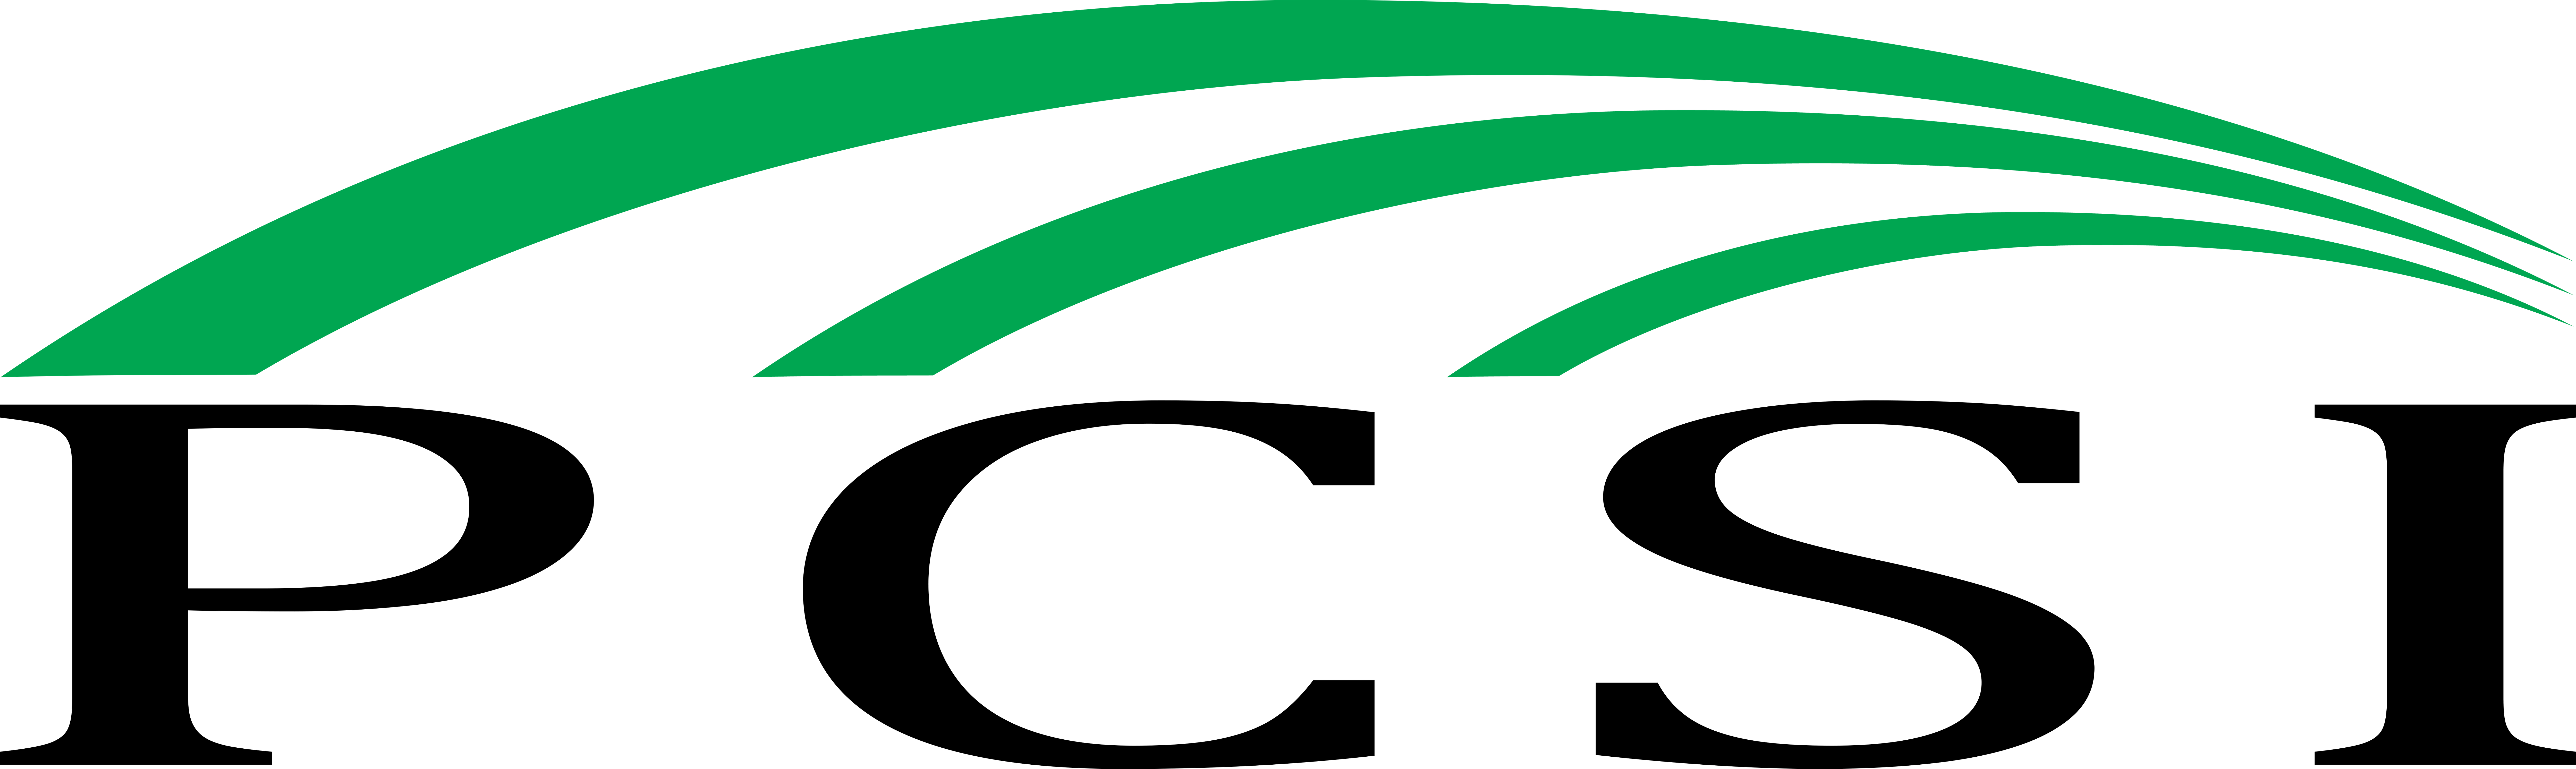 Pcsi Logo Vector Outline - Pcsi Logo (10626x3173)